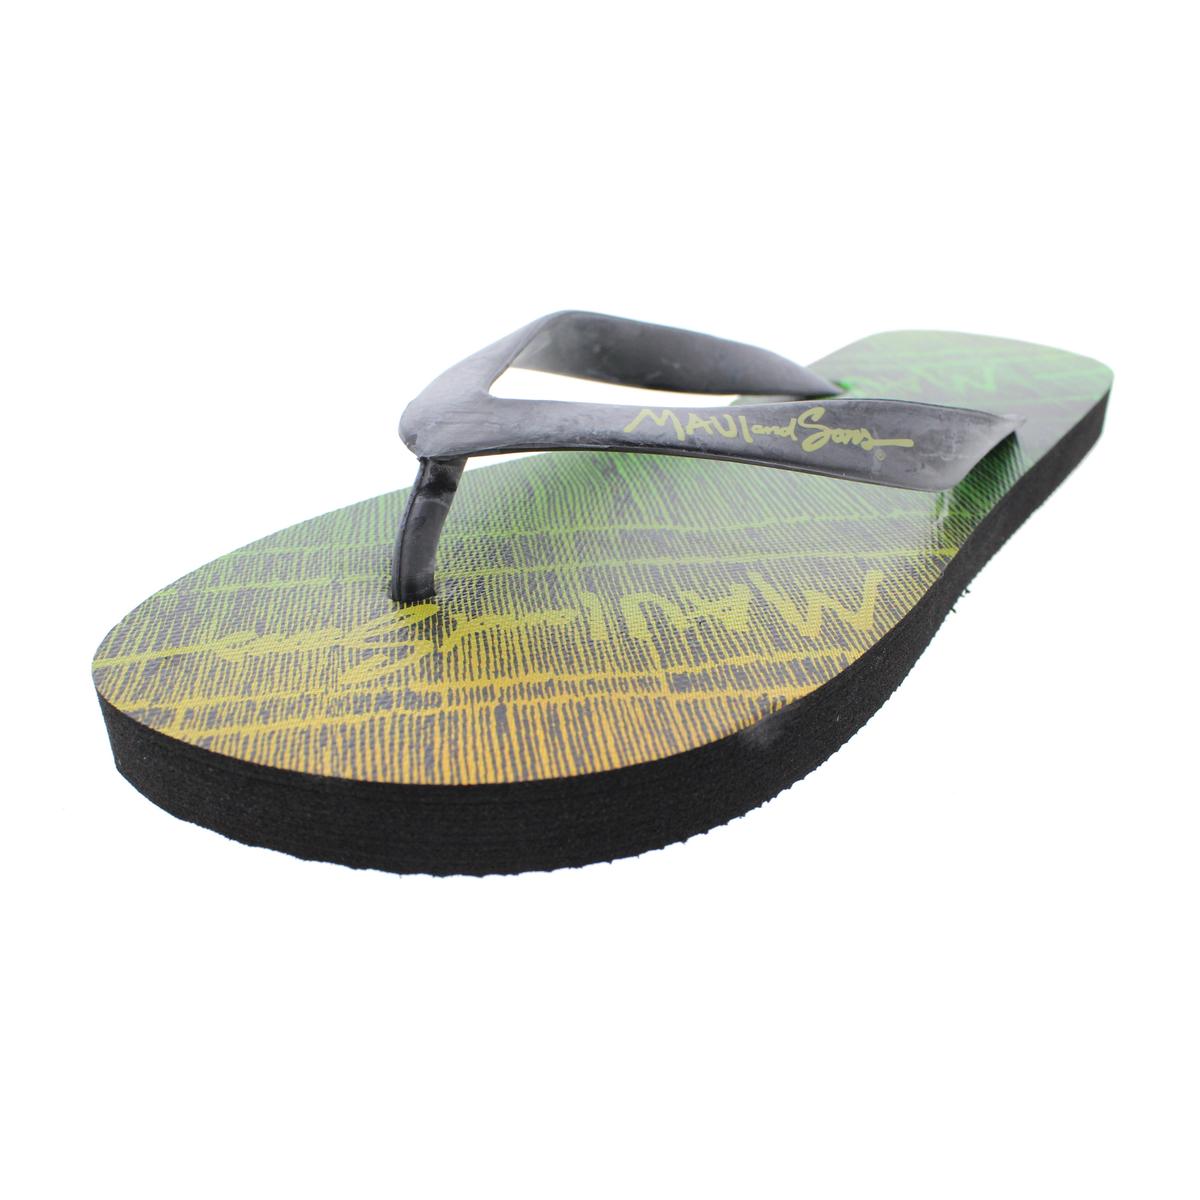 Maui and Sons 6946 Mens Graphic Slide FlipFlops Sandals